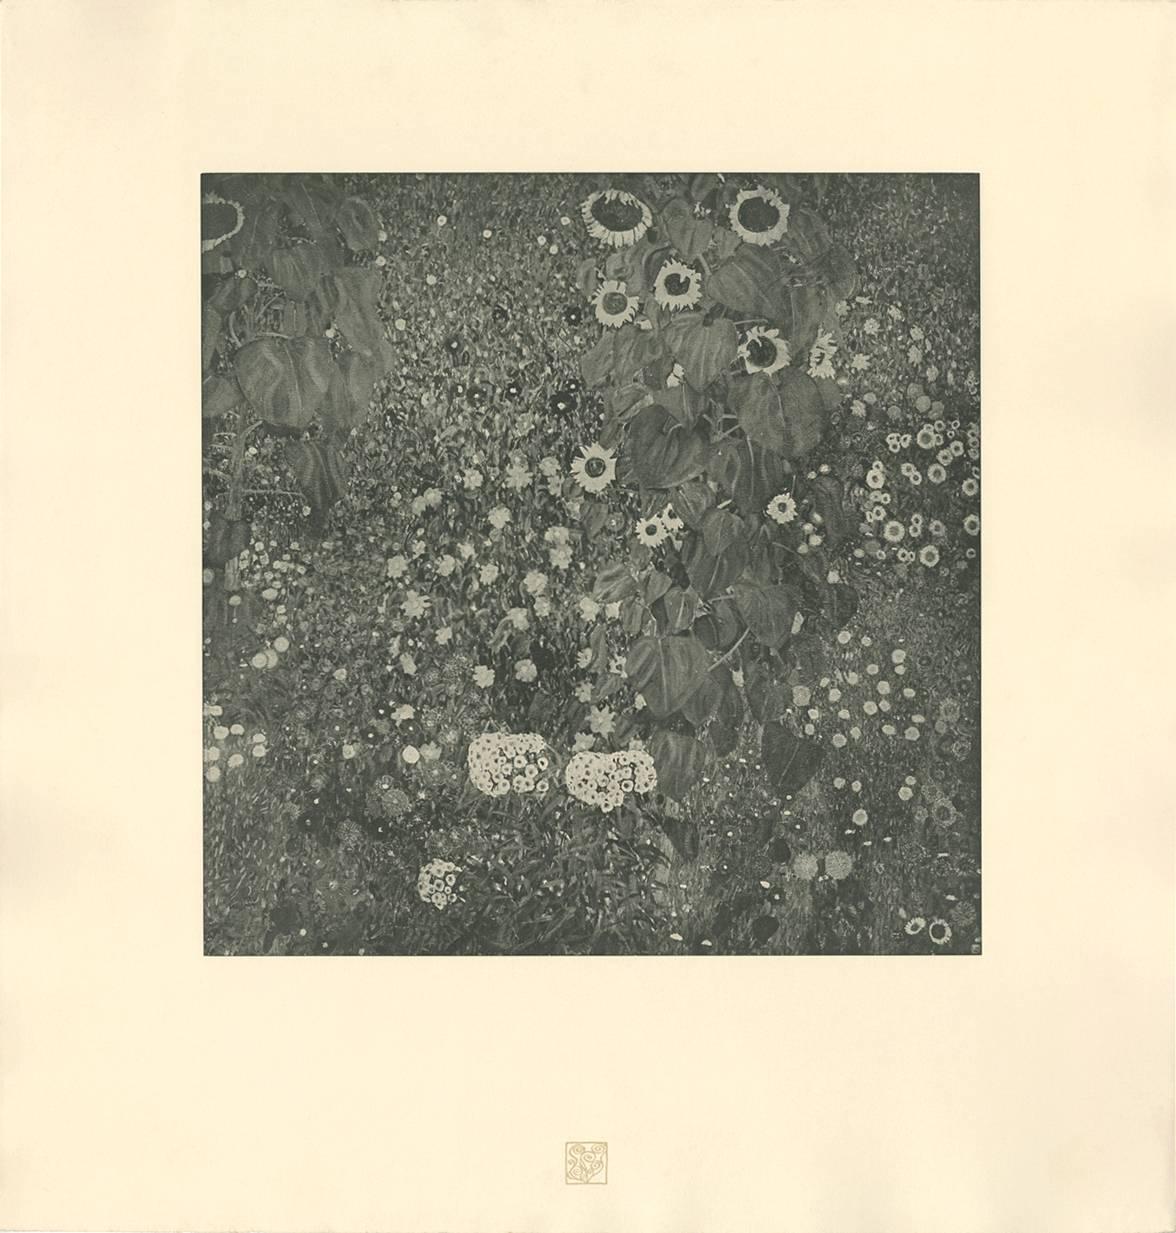 H.O. Miethke Das Werk folio "Farm Garden With Sunflowers" collotype print